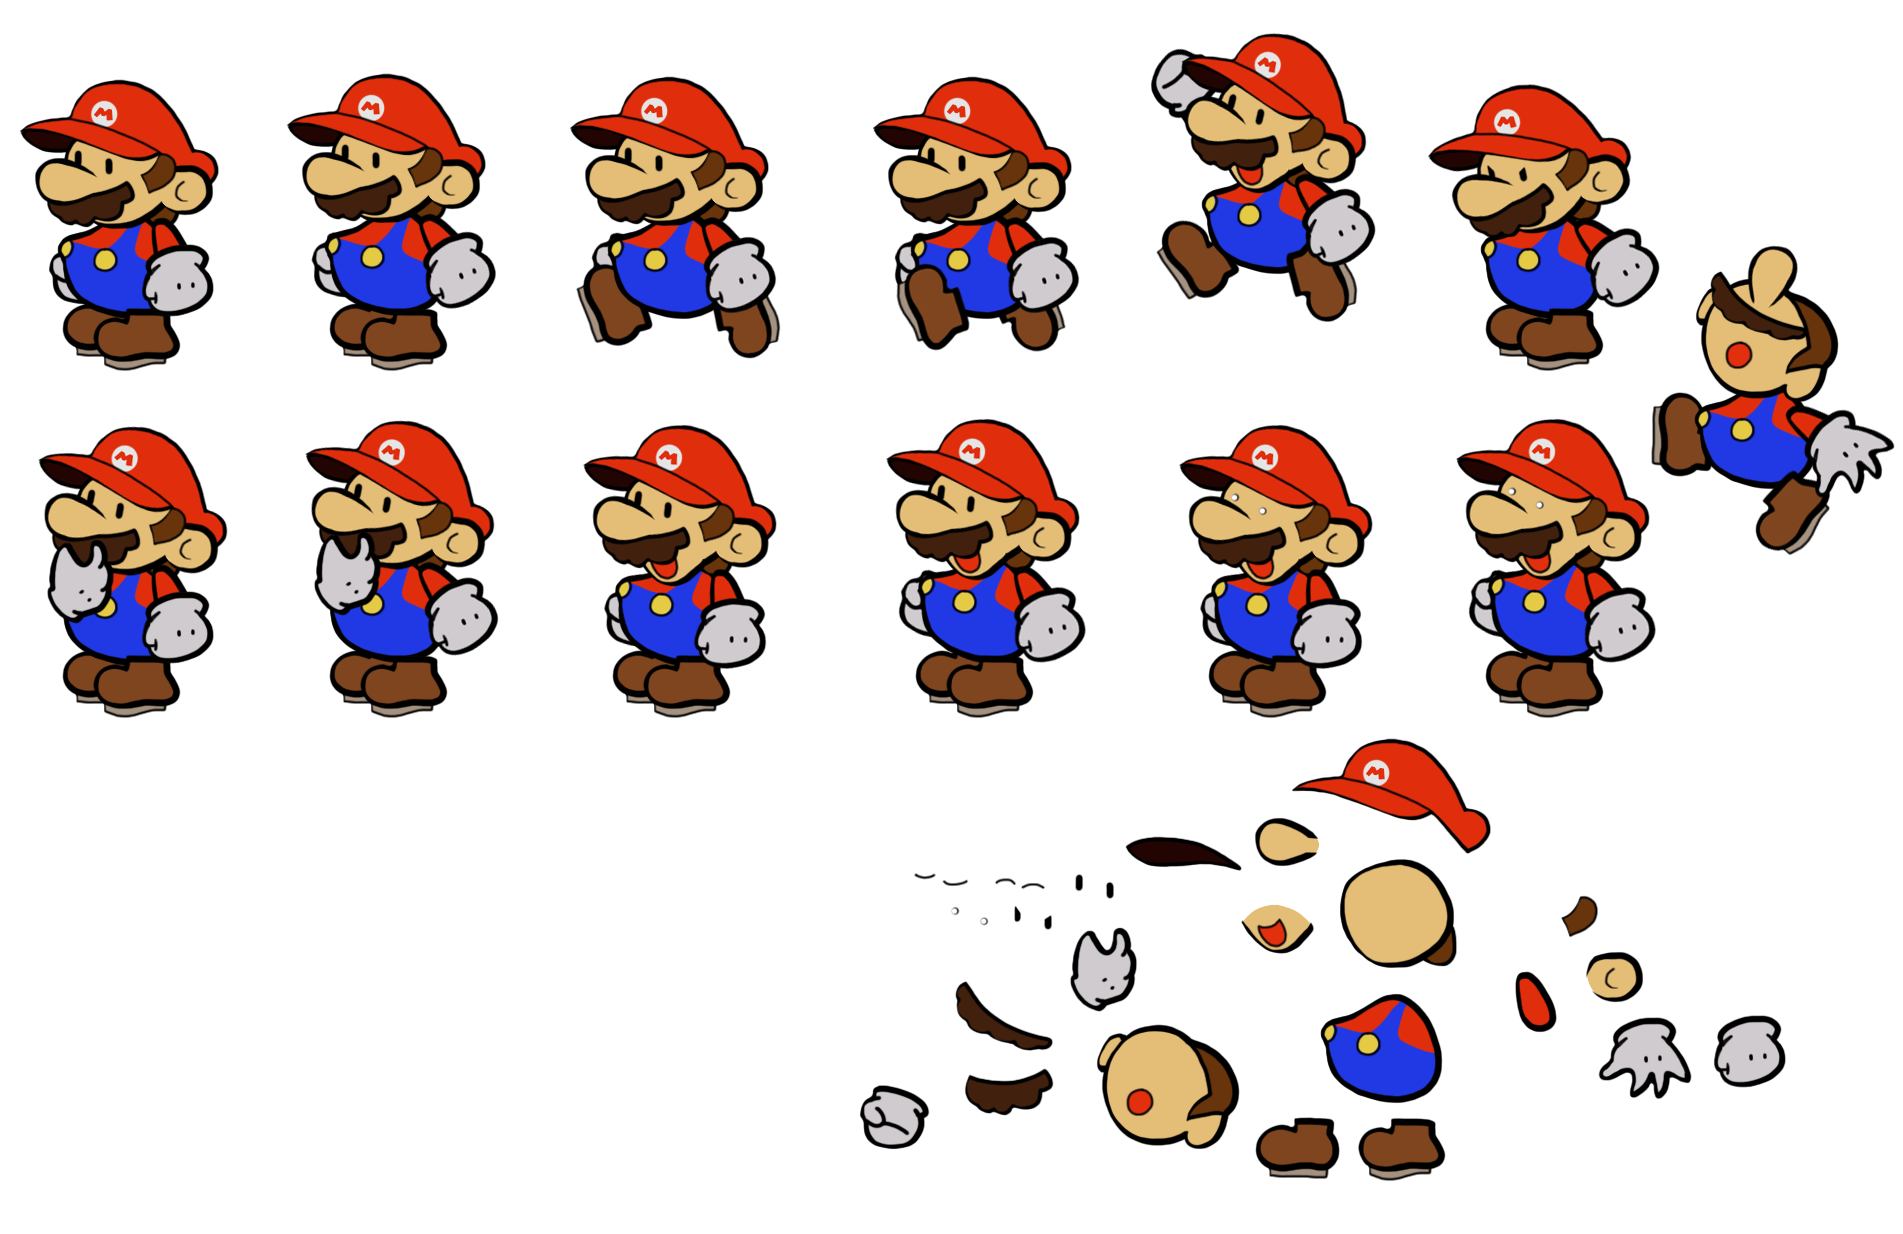 Mario bros sprites. Герои Марио Sprite. Марио персонаж спрайт. Спрайты для Марио 2d. Спрайт Марио для скретча.